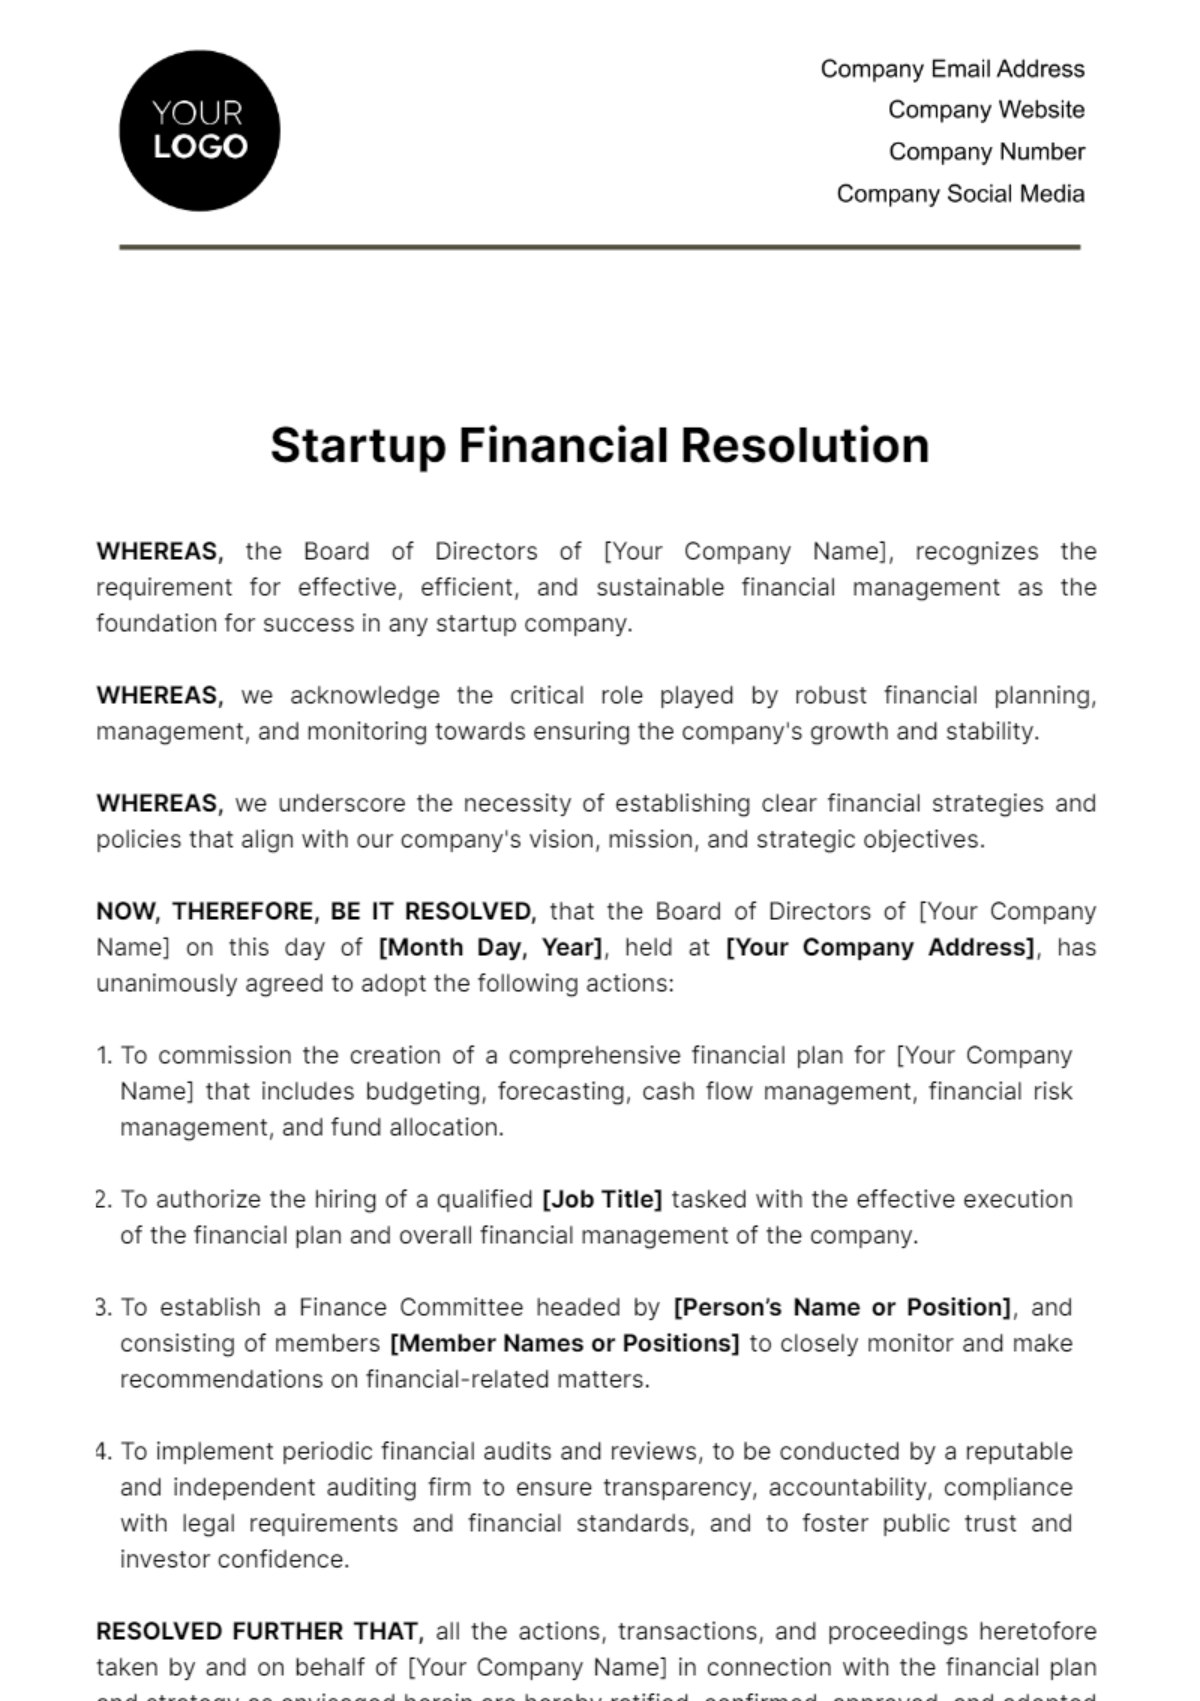 Startup Financial Resolution Template